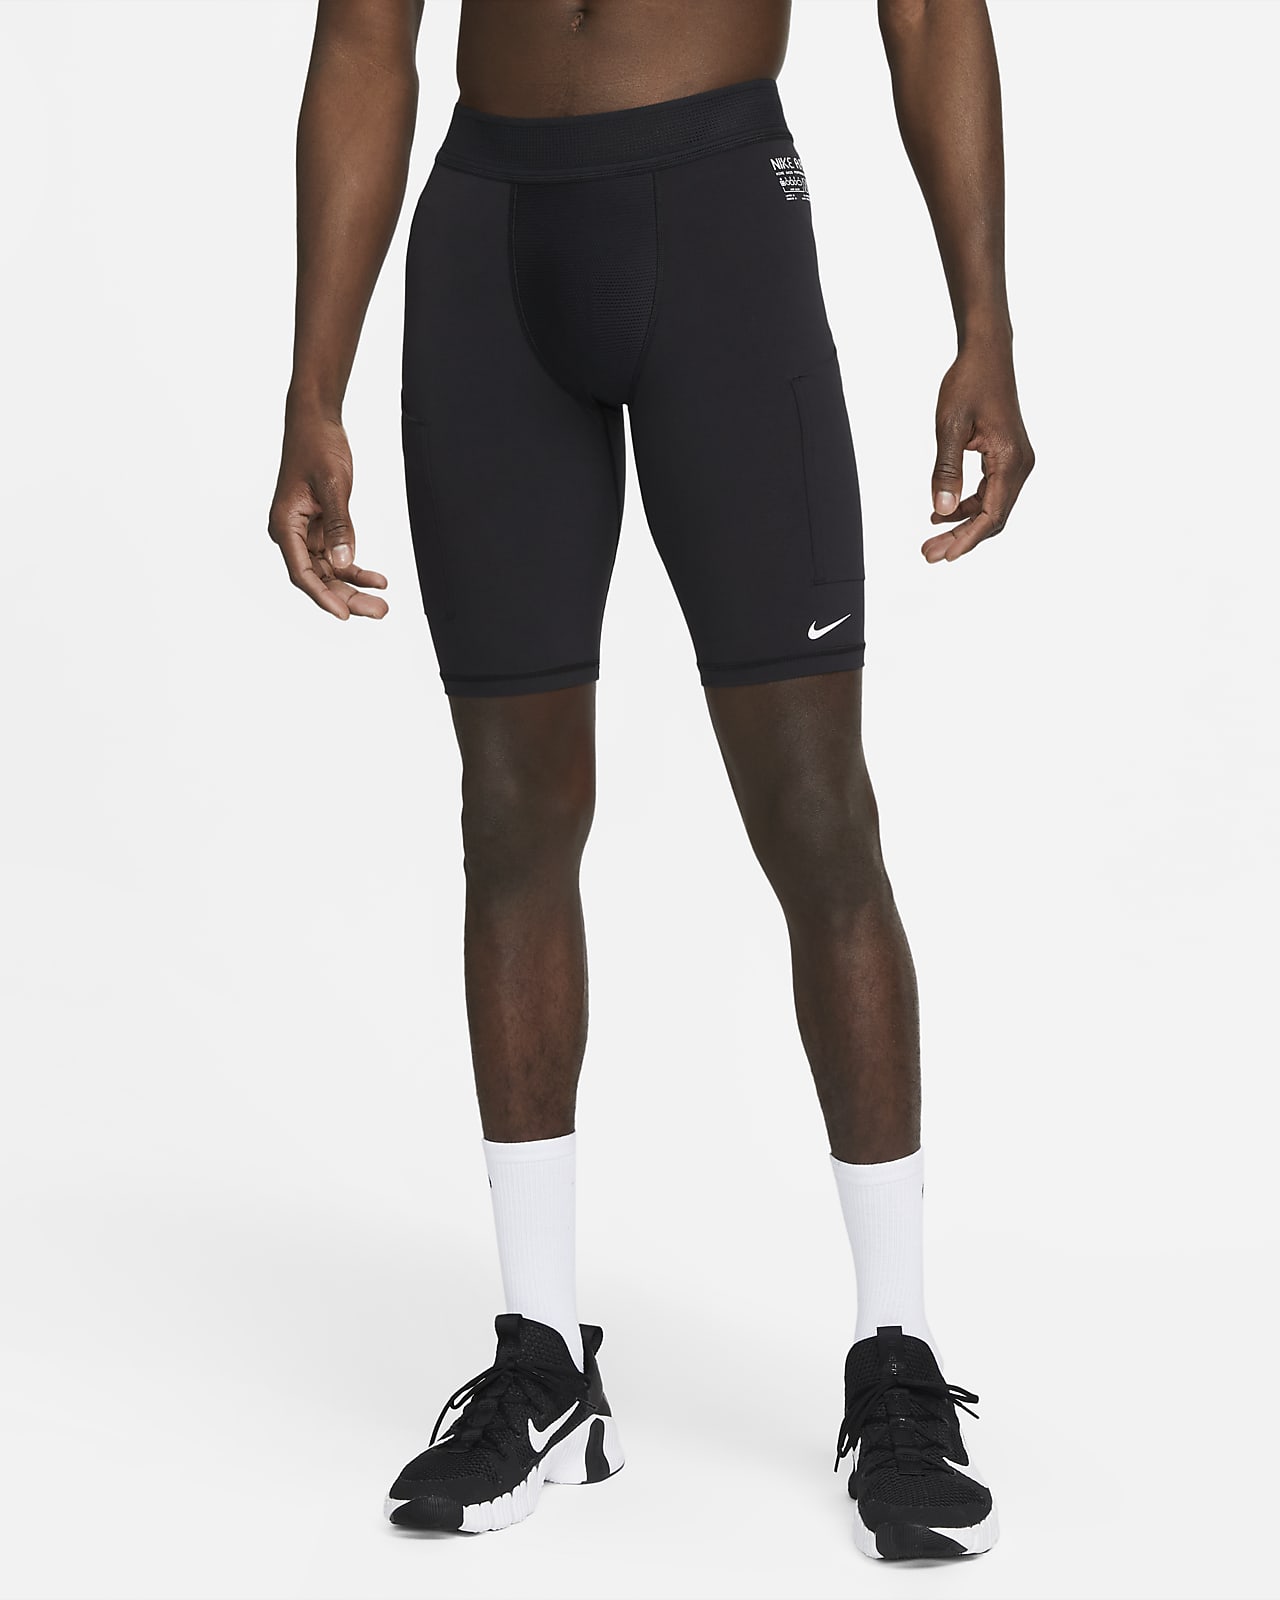 Nike mens Dry-Fit Training Shorts